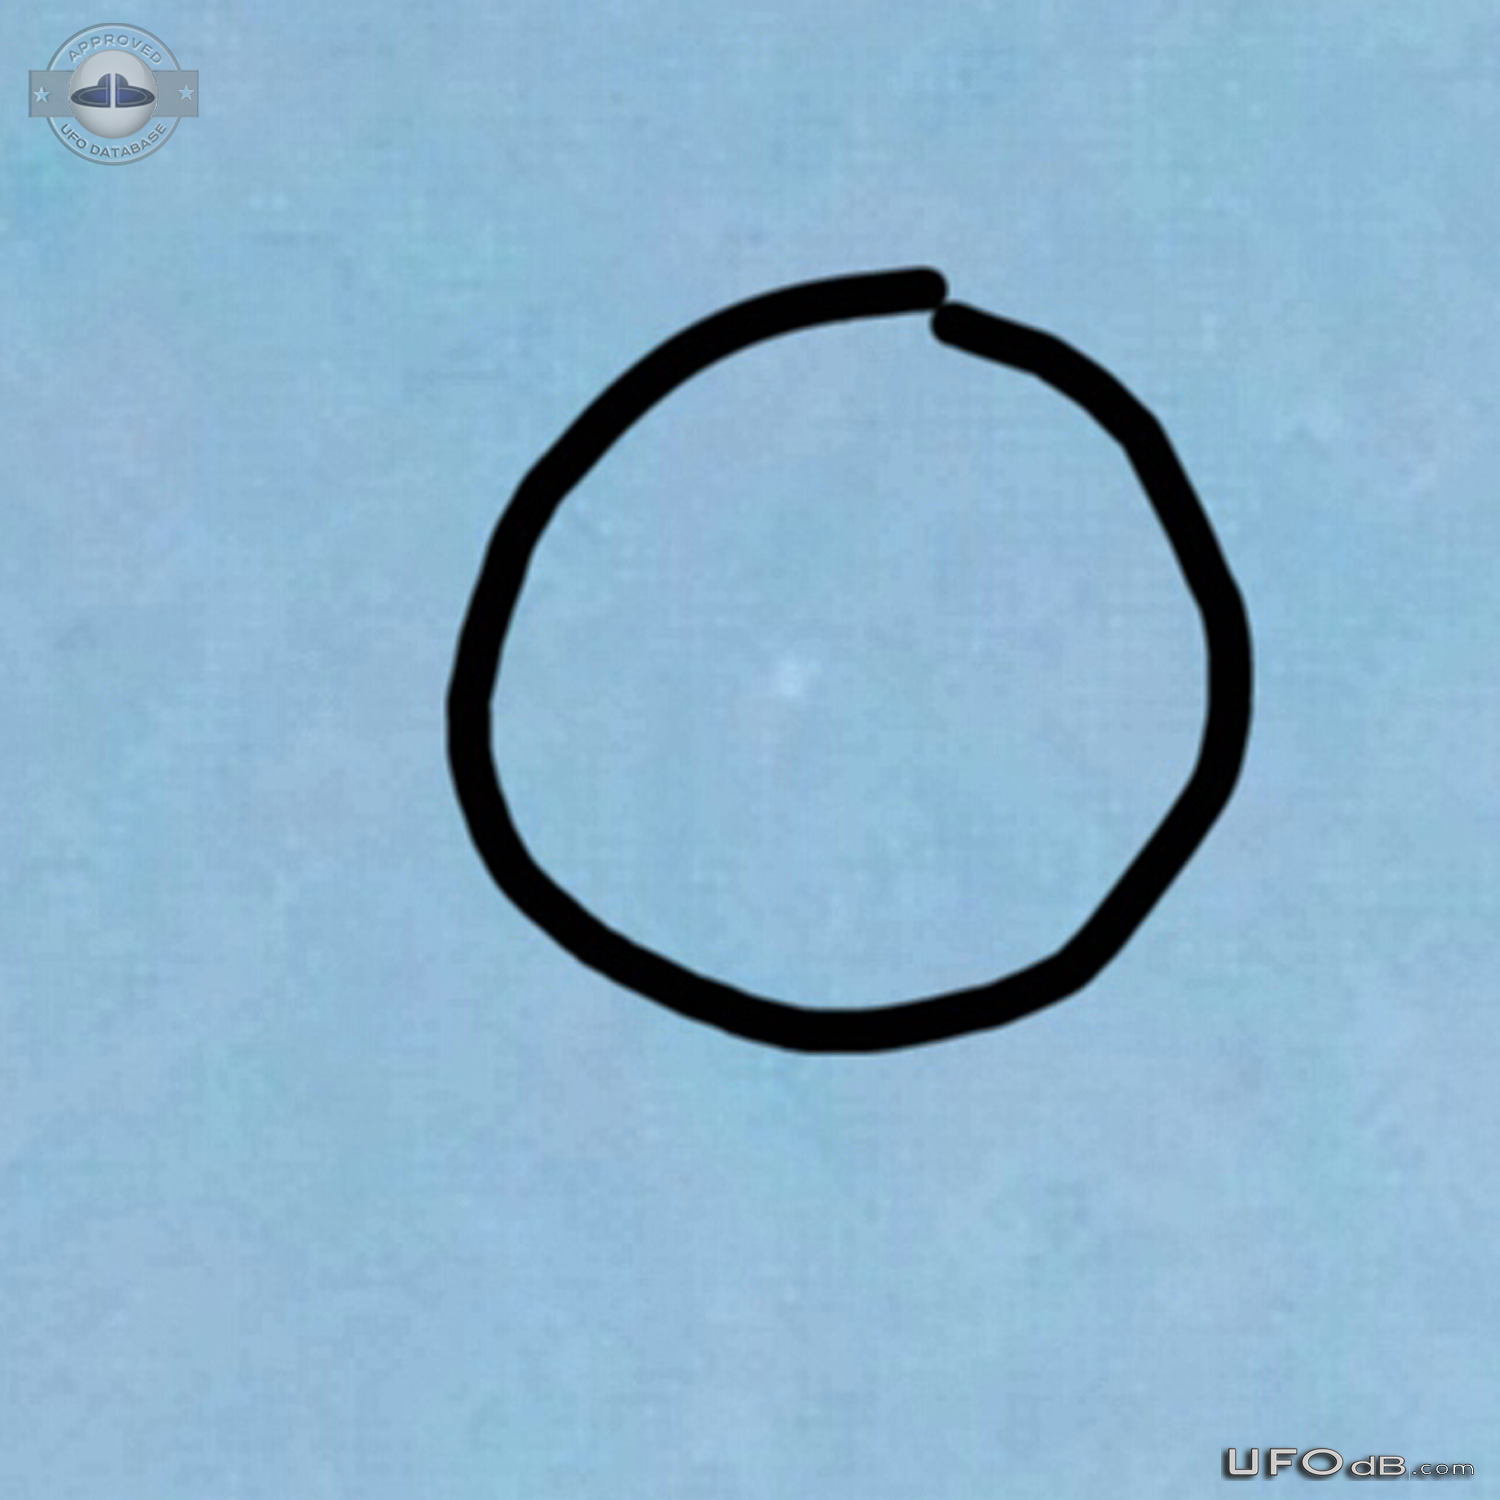 White disc shaped UFO sighting over Saint Marys Georgia USA 2015 UFO Picture #680-3